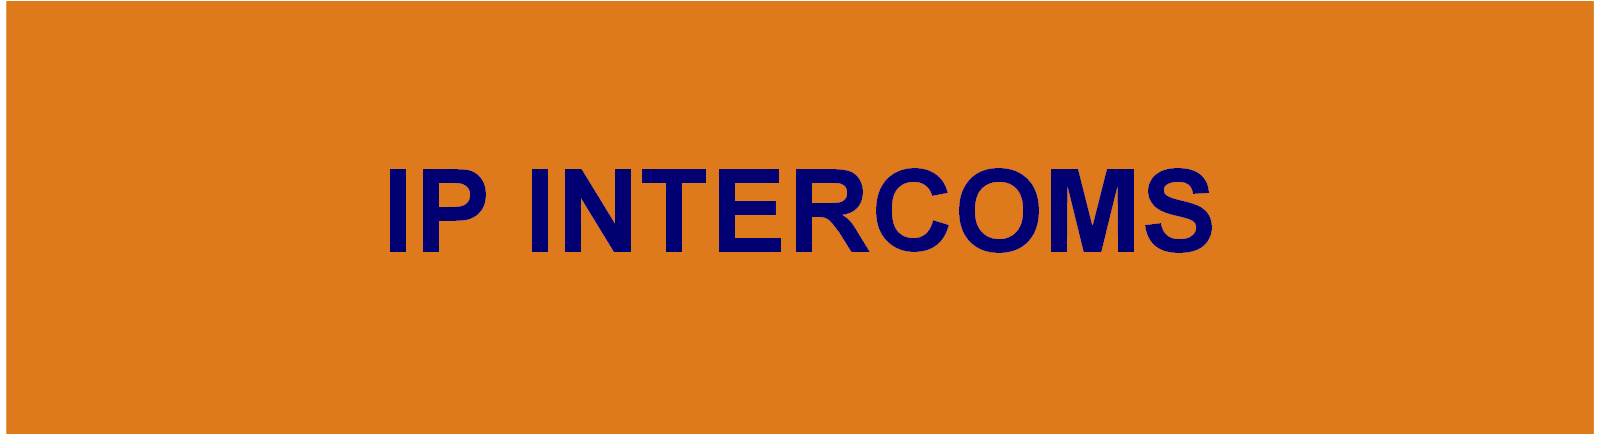 Cisco Webex Configuration Guide IP Intercoms